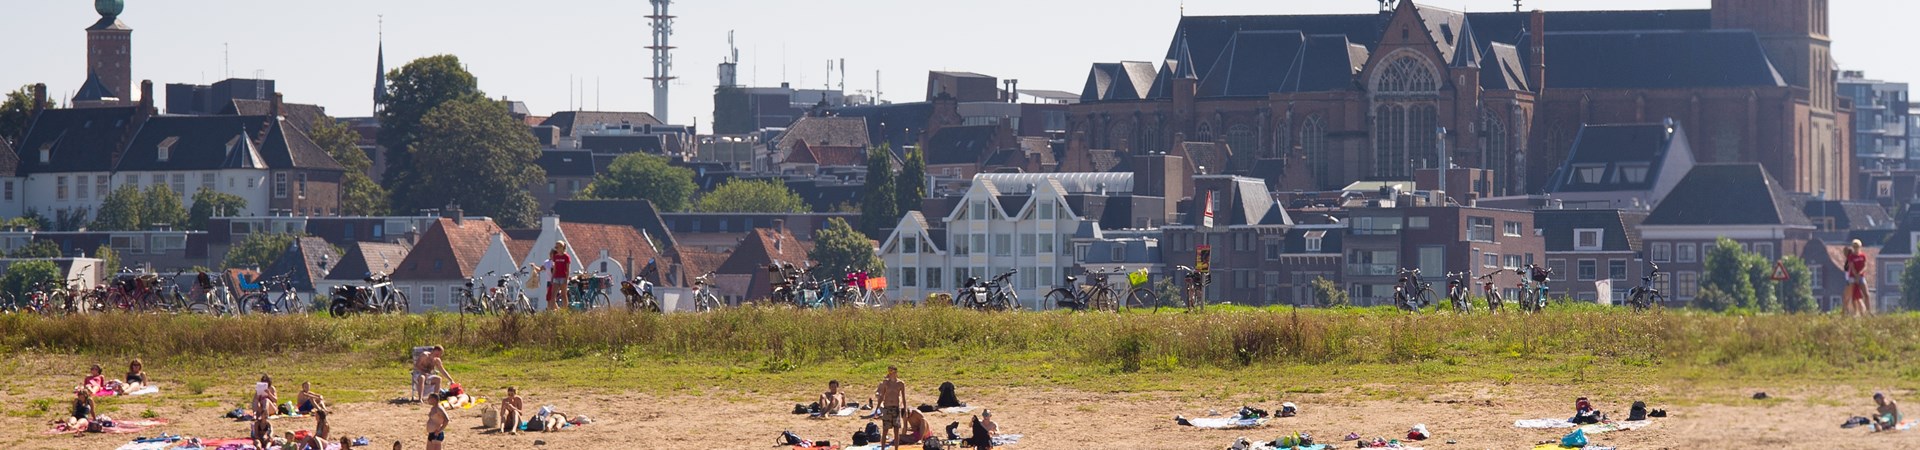 Strand Nijmegen Lent